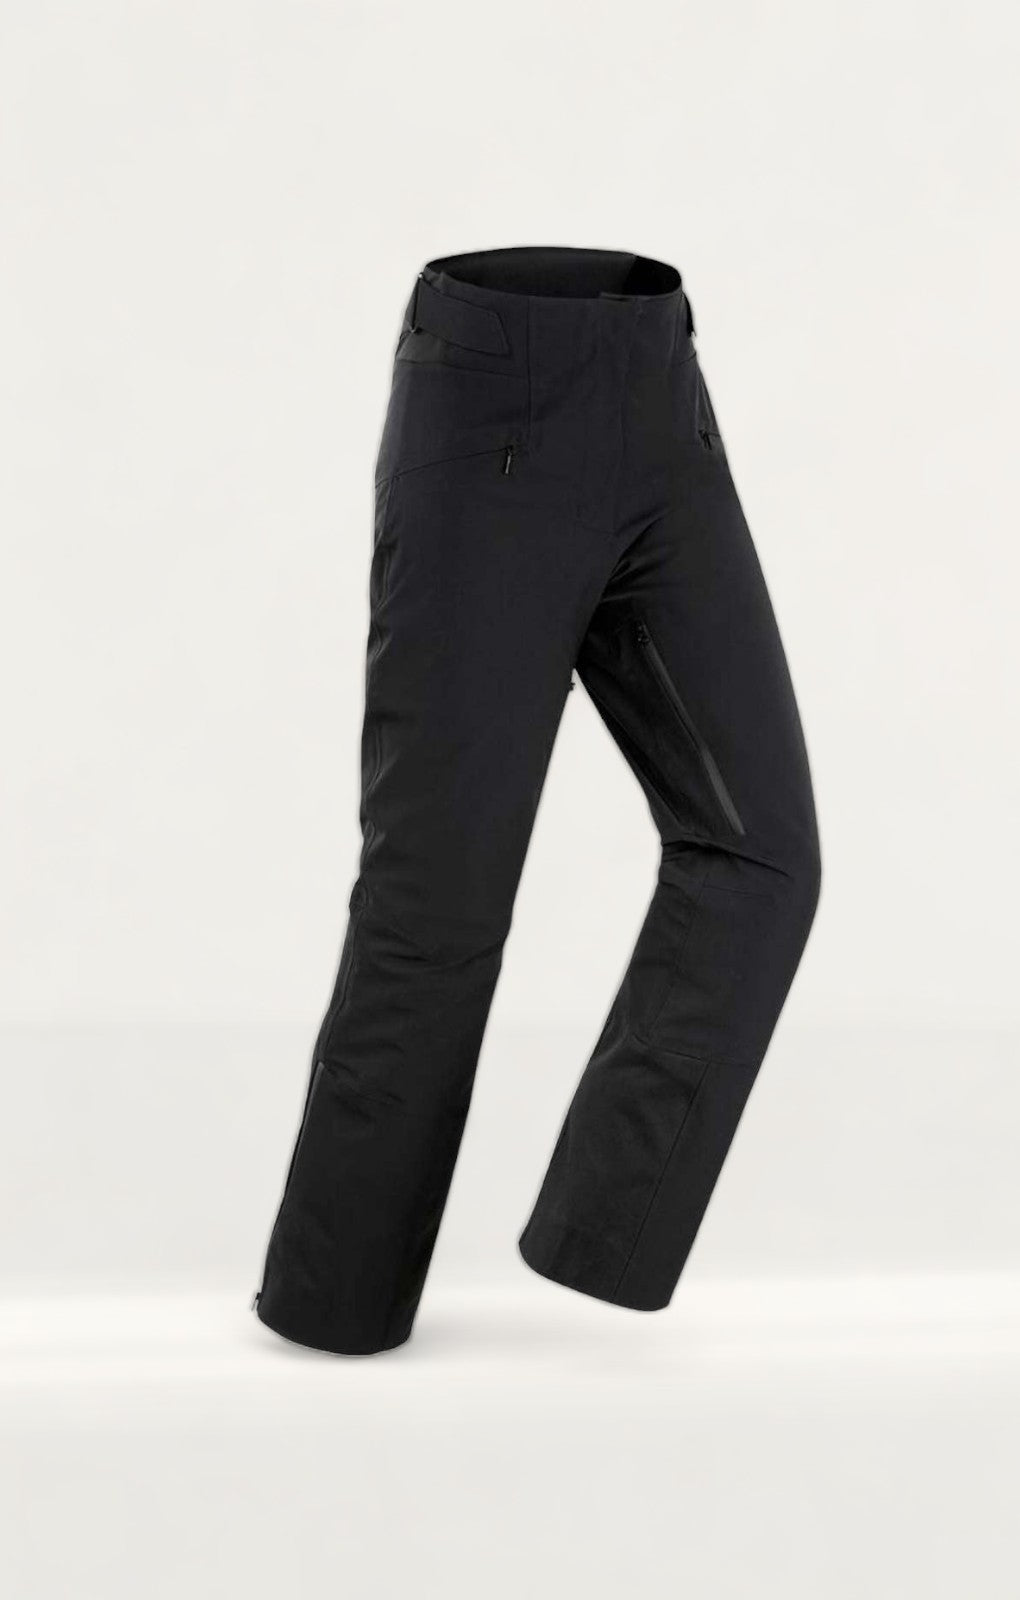 Jeans & Pants | Decathlon Trouser | Freeup